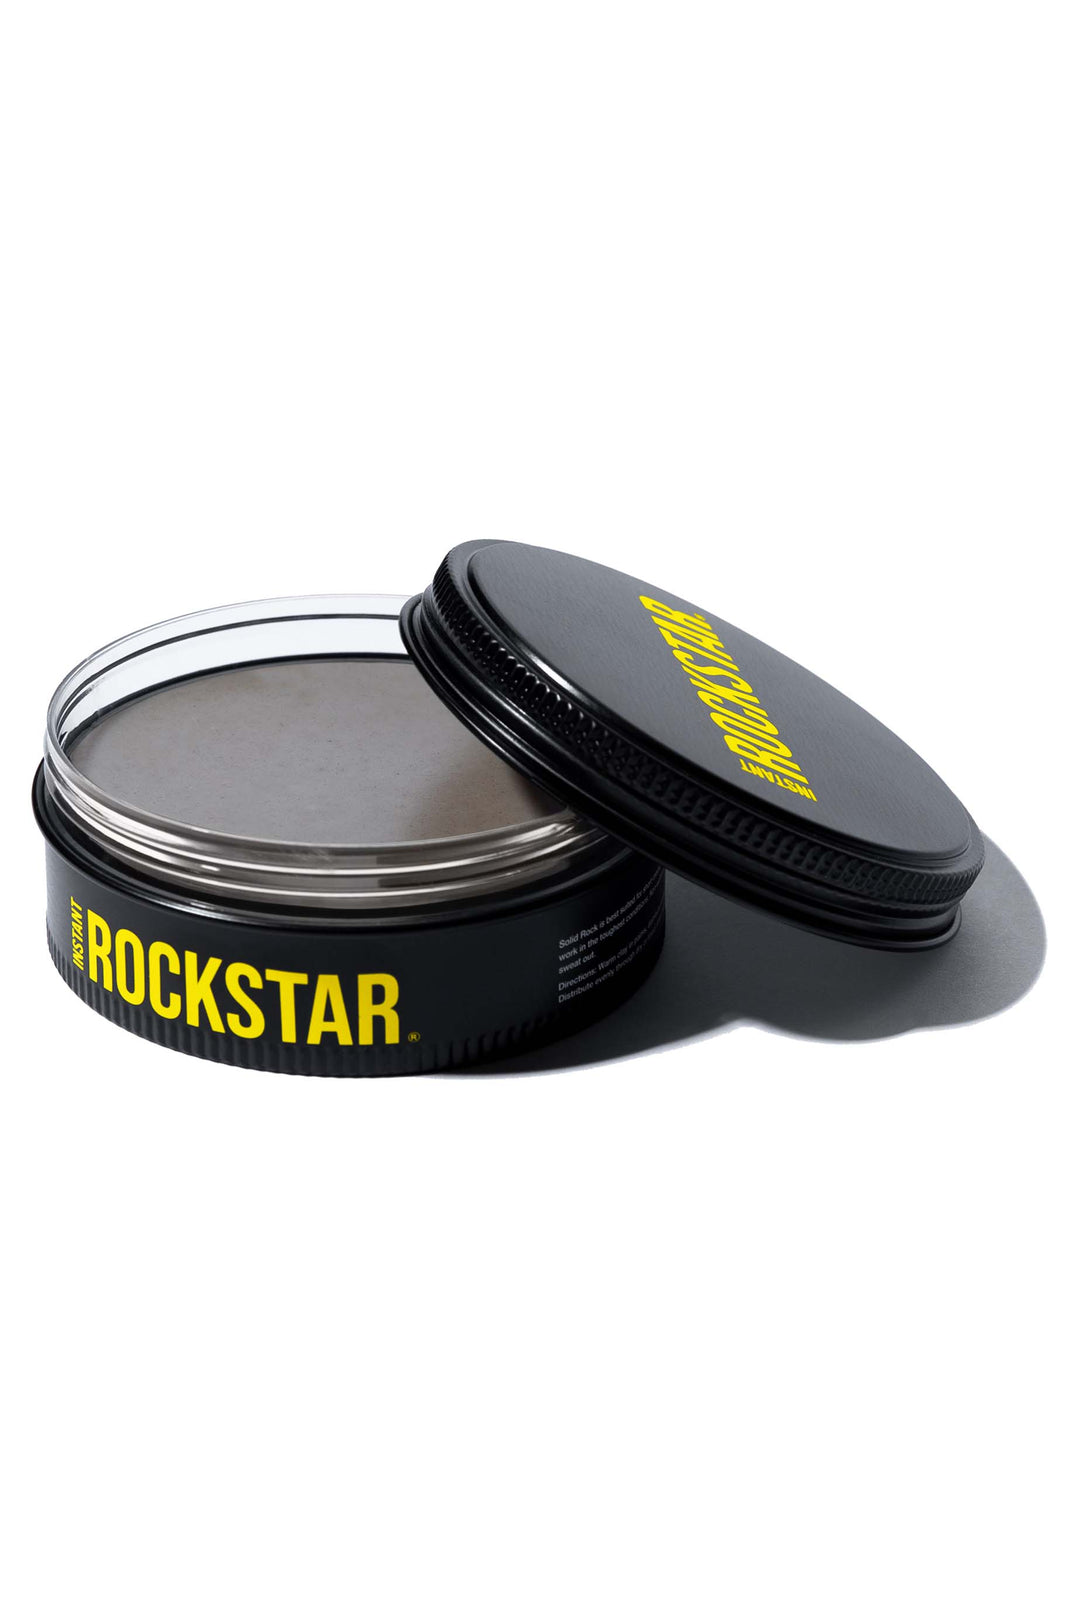 instant-rockstar-solid-rock-100ml